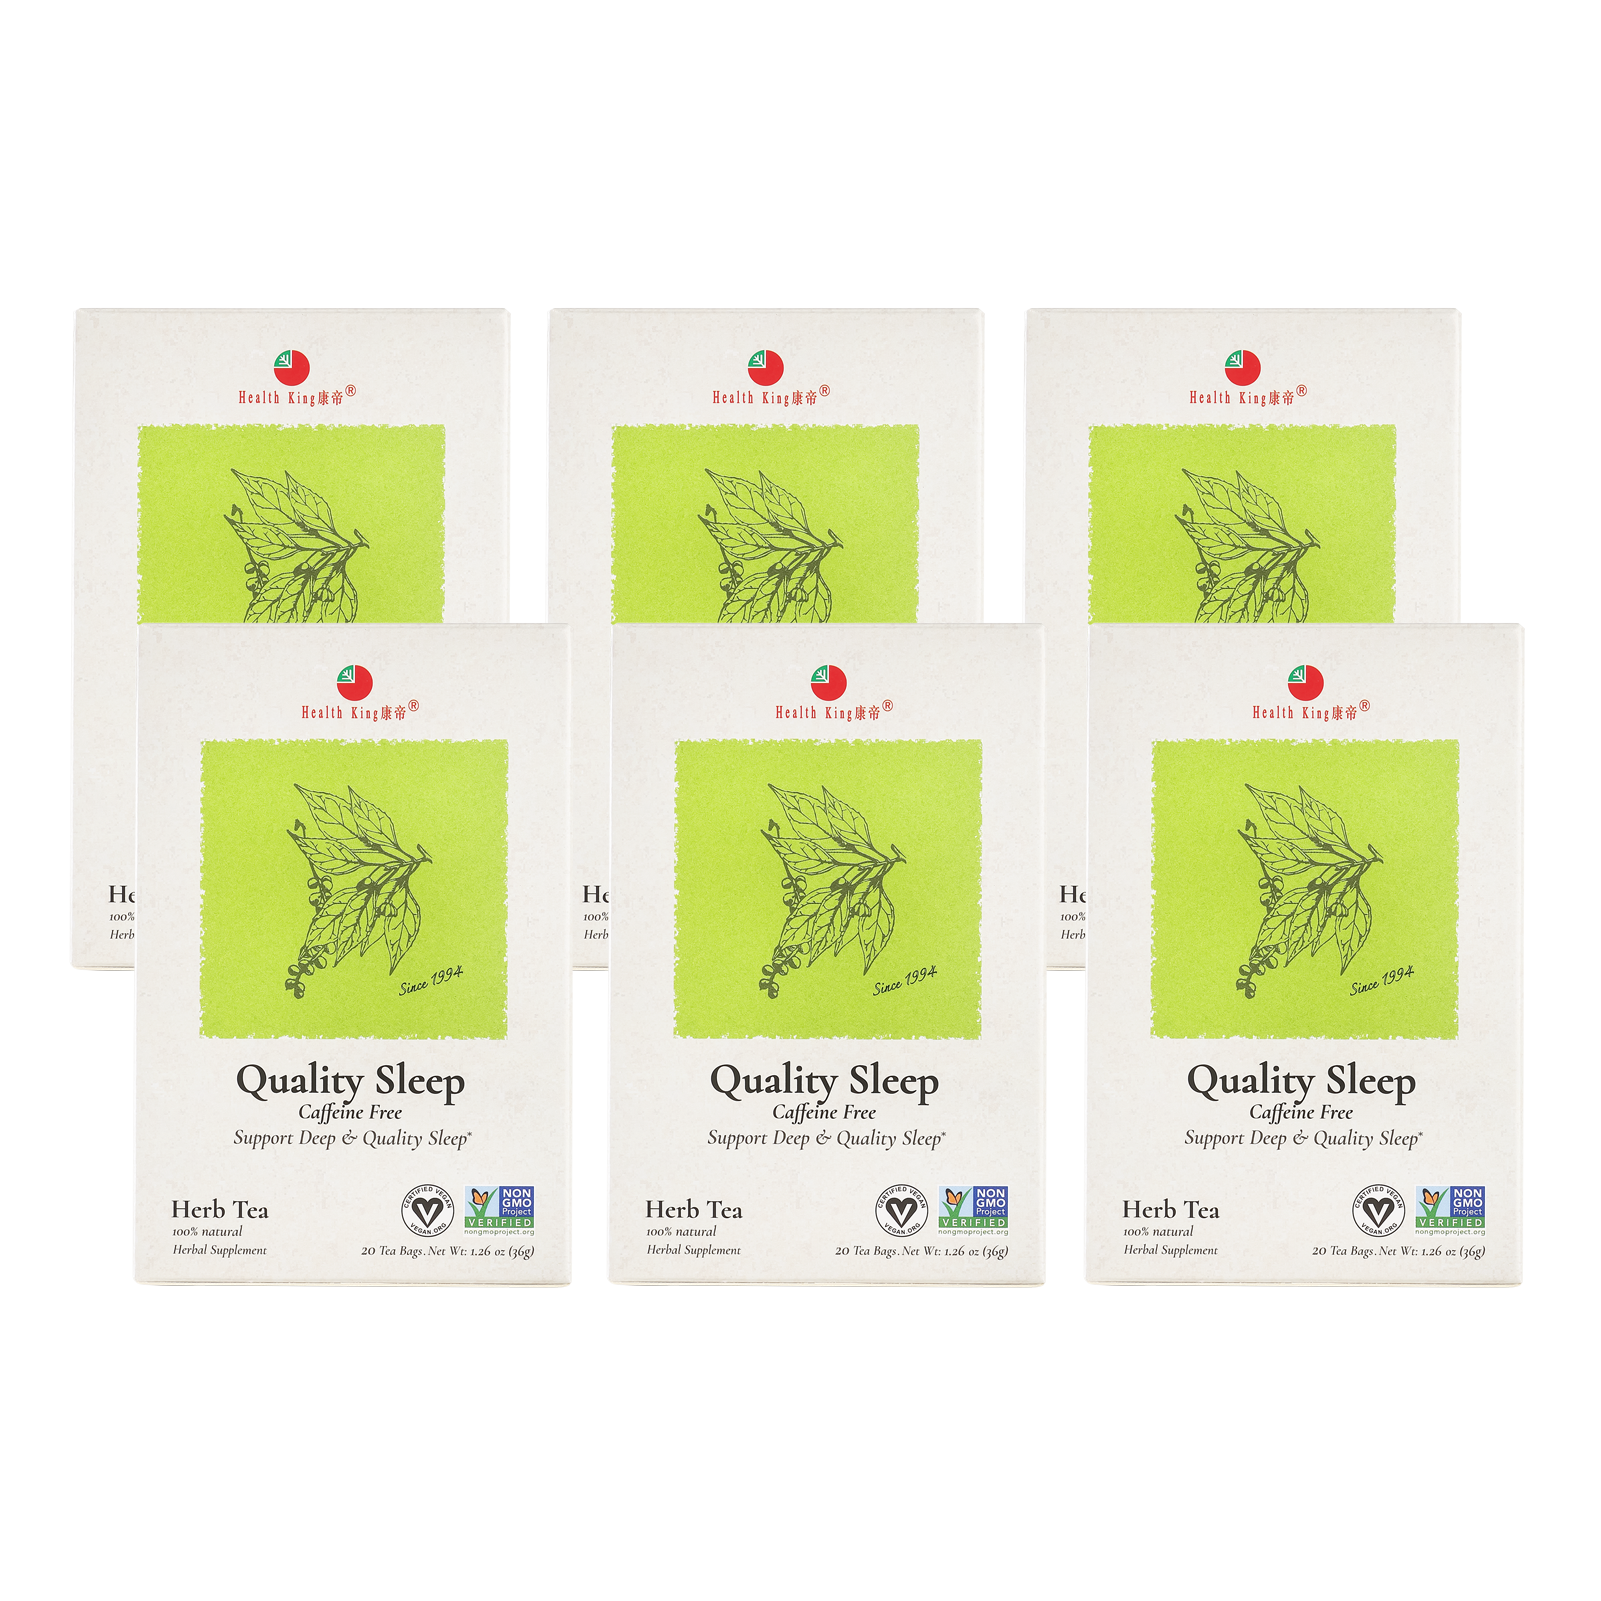 Six packets of Quality Sleep Herb Tea showcasing organic ingredients